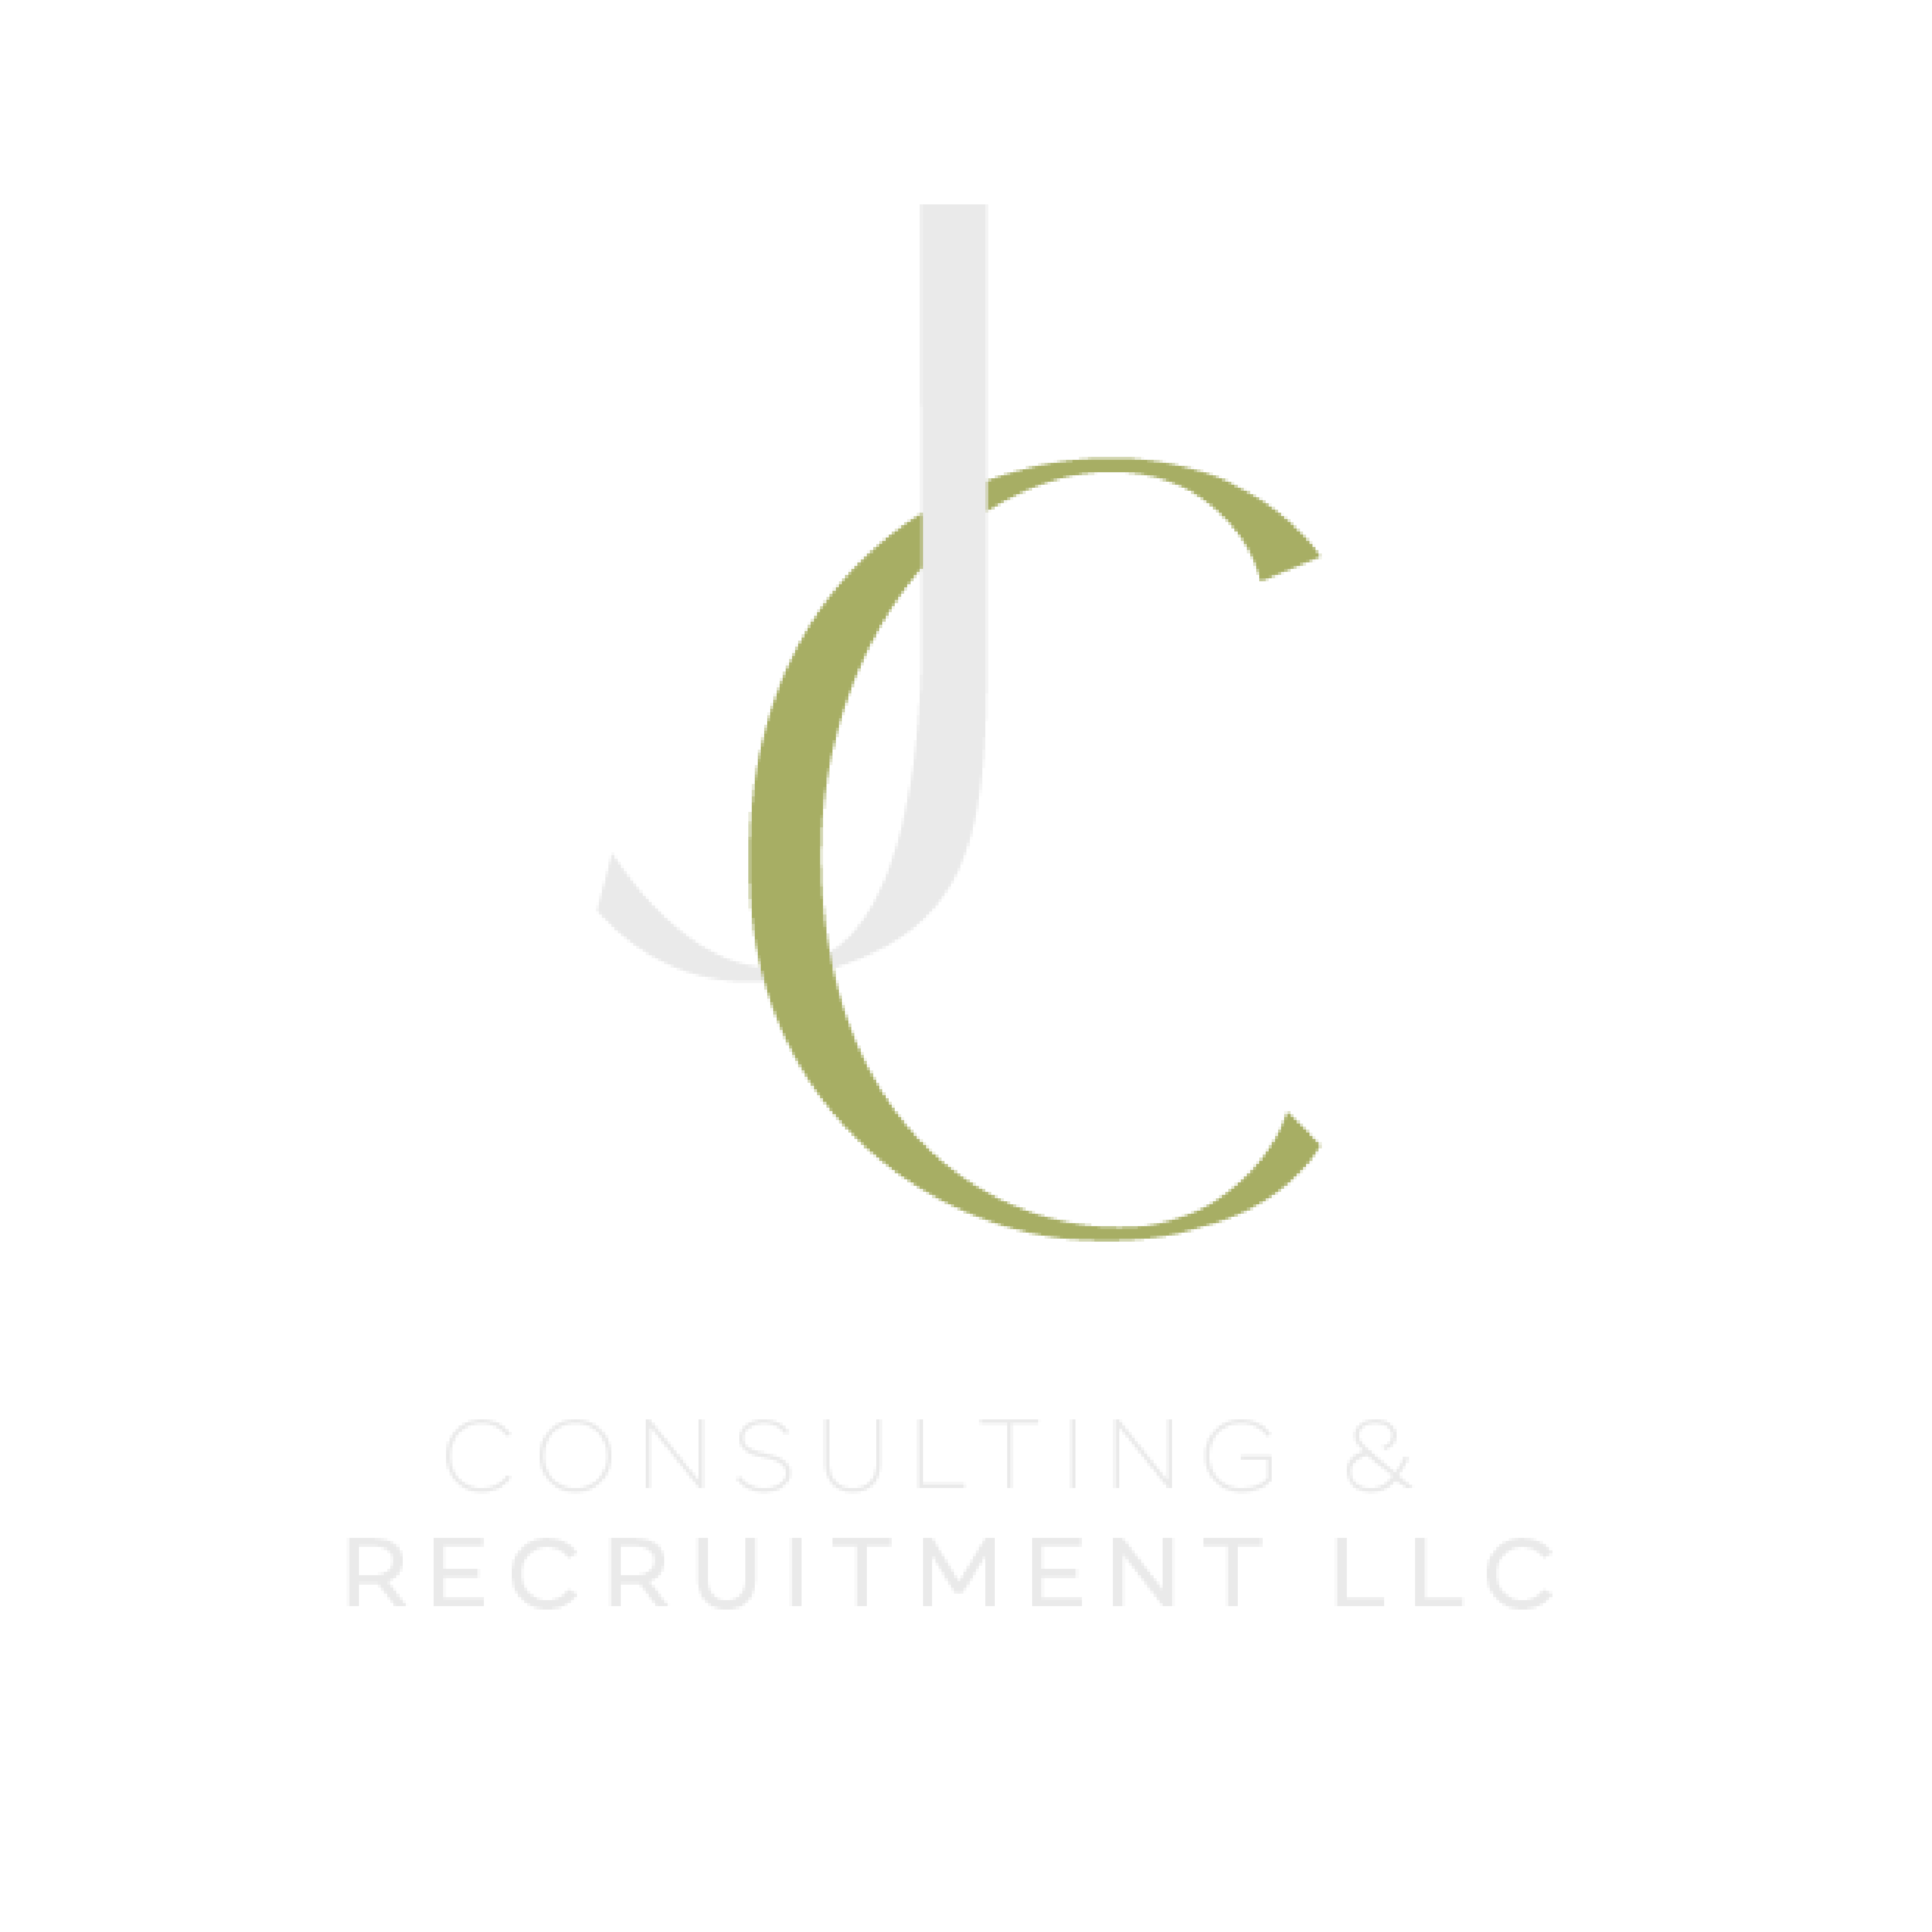 jc consulting recruitment